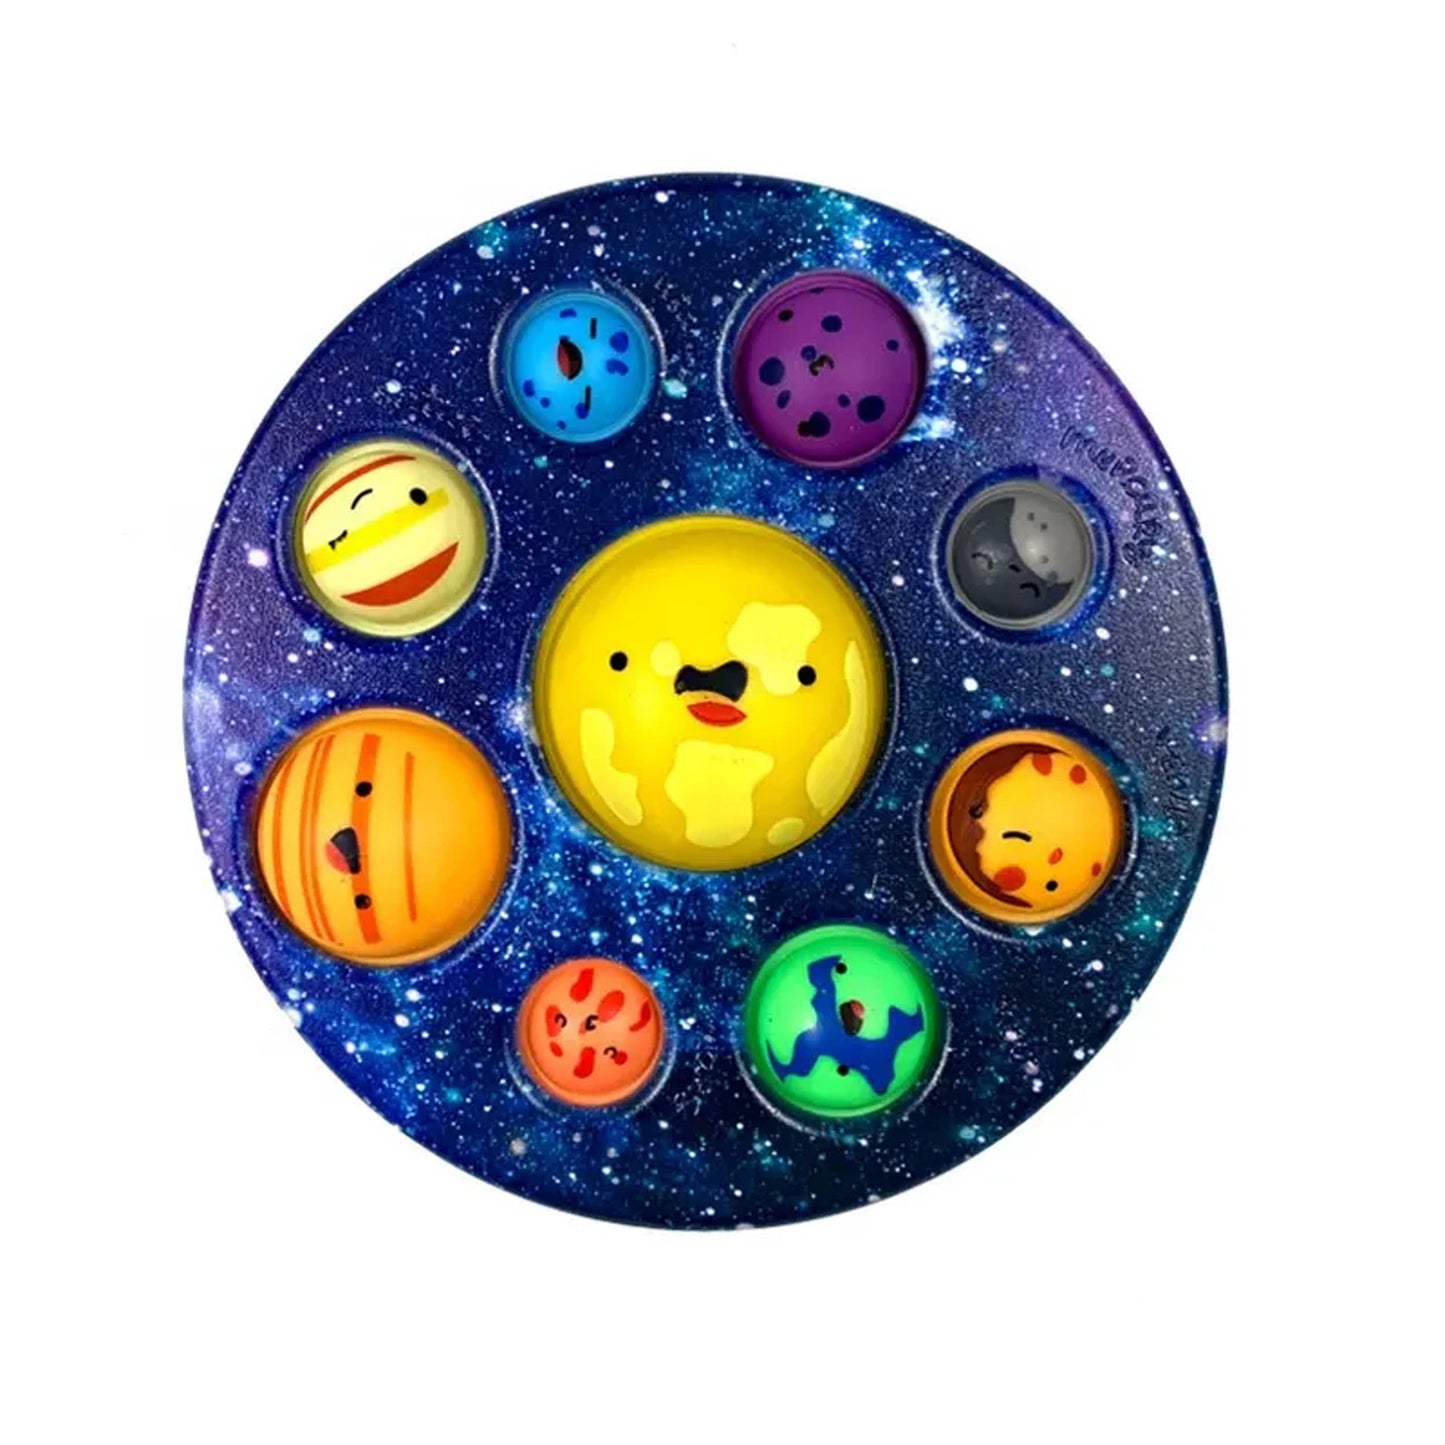 Planet Dimple Solar System Fidget Toy for Kids